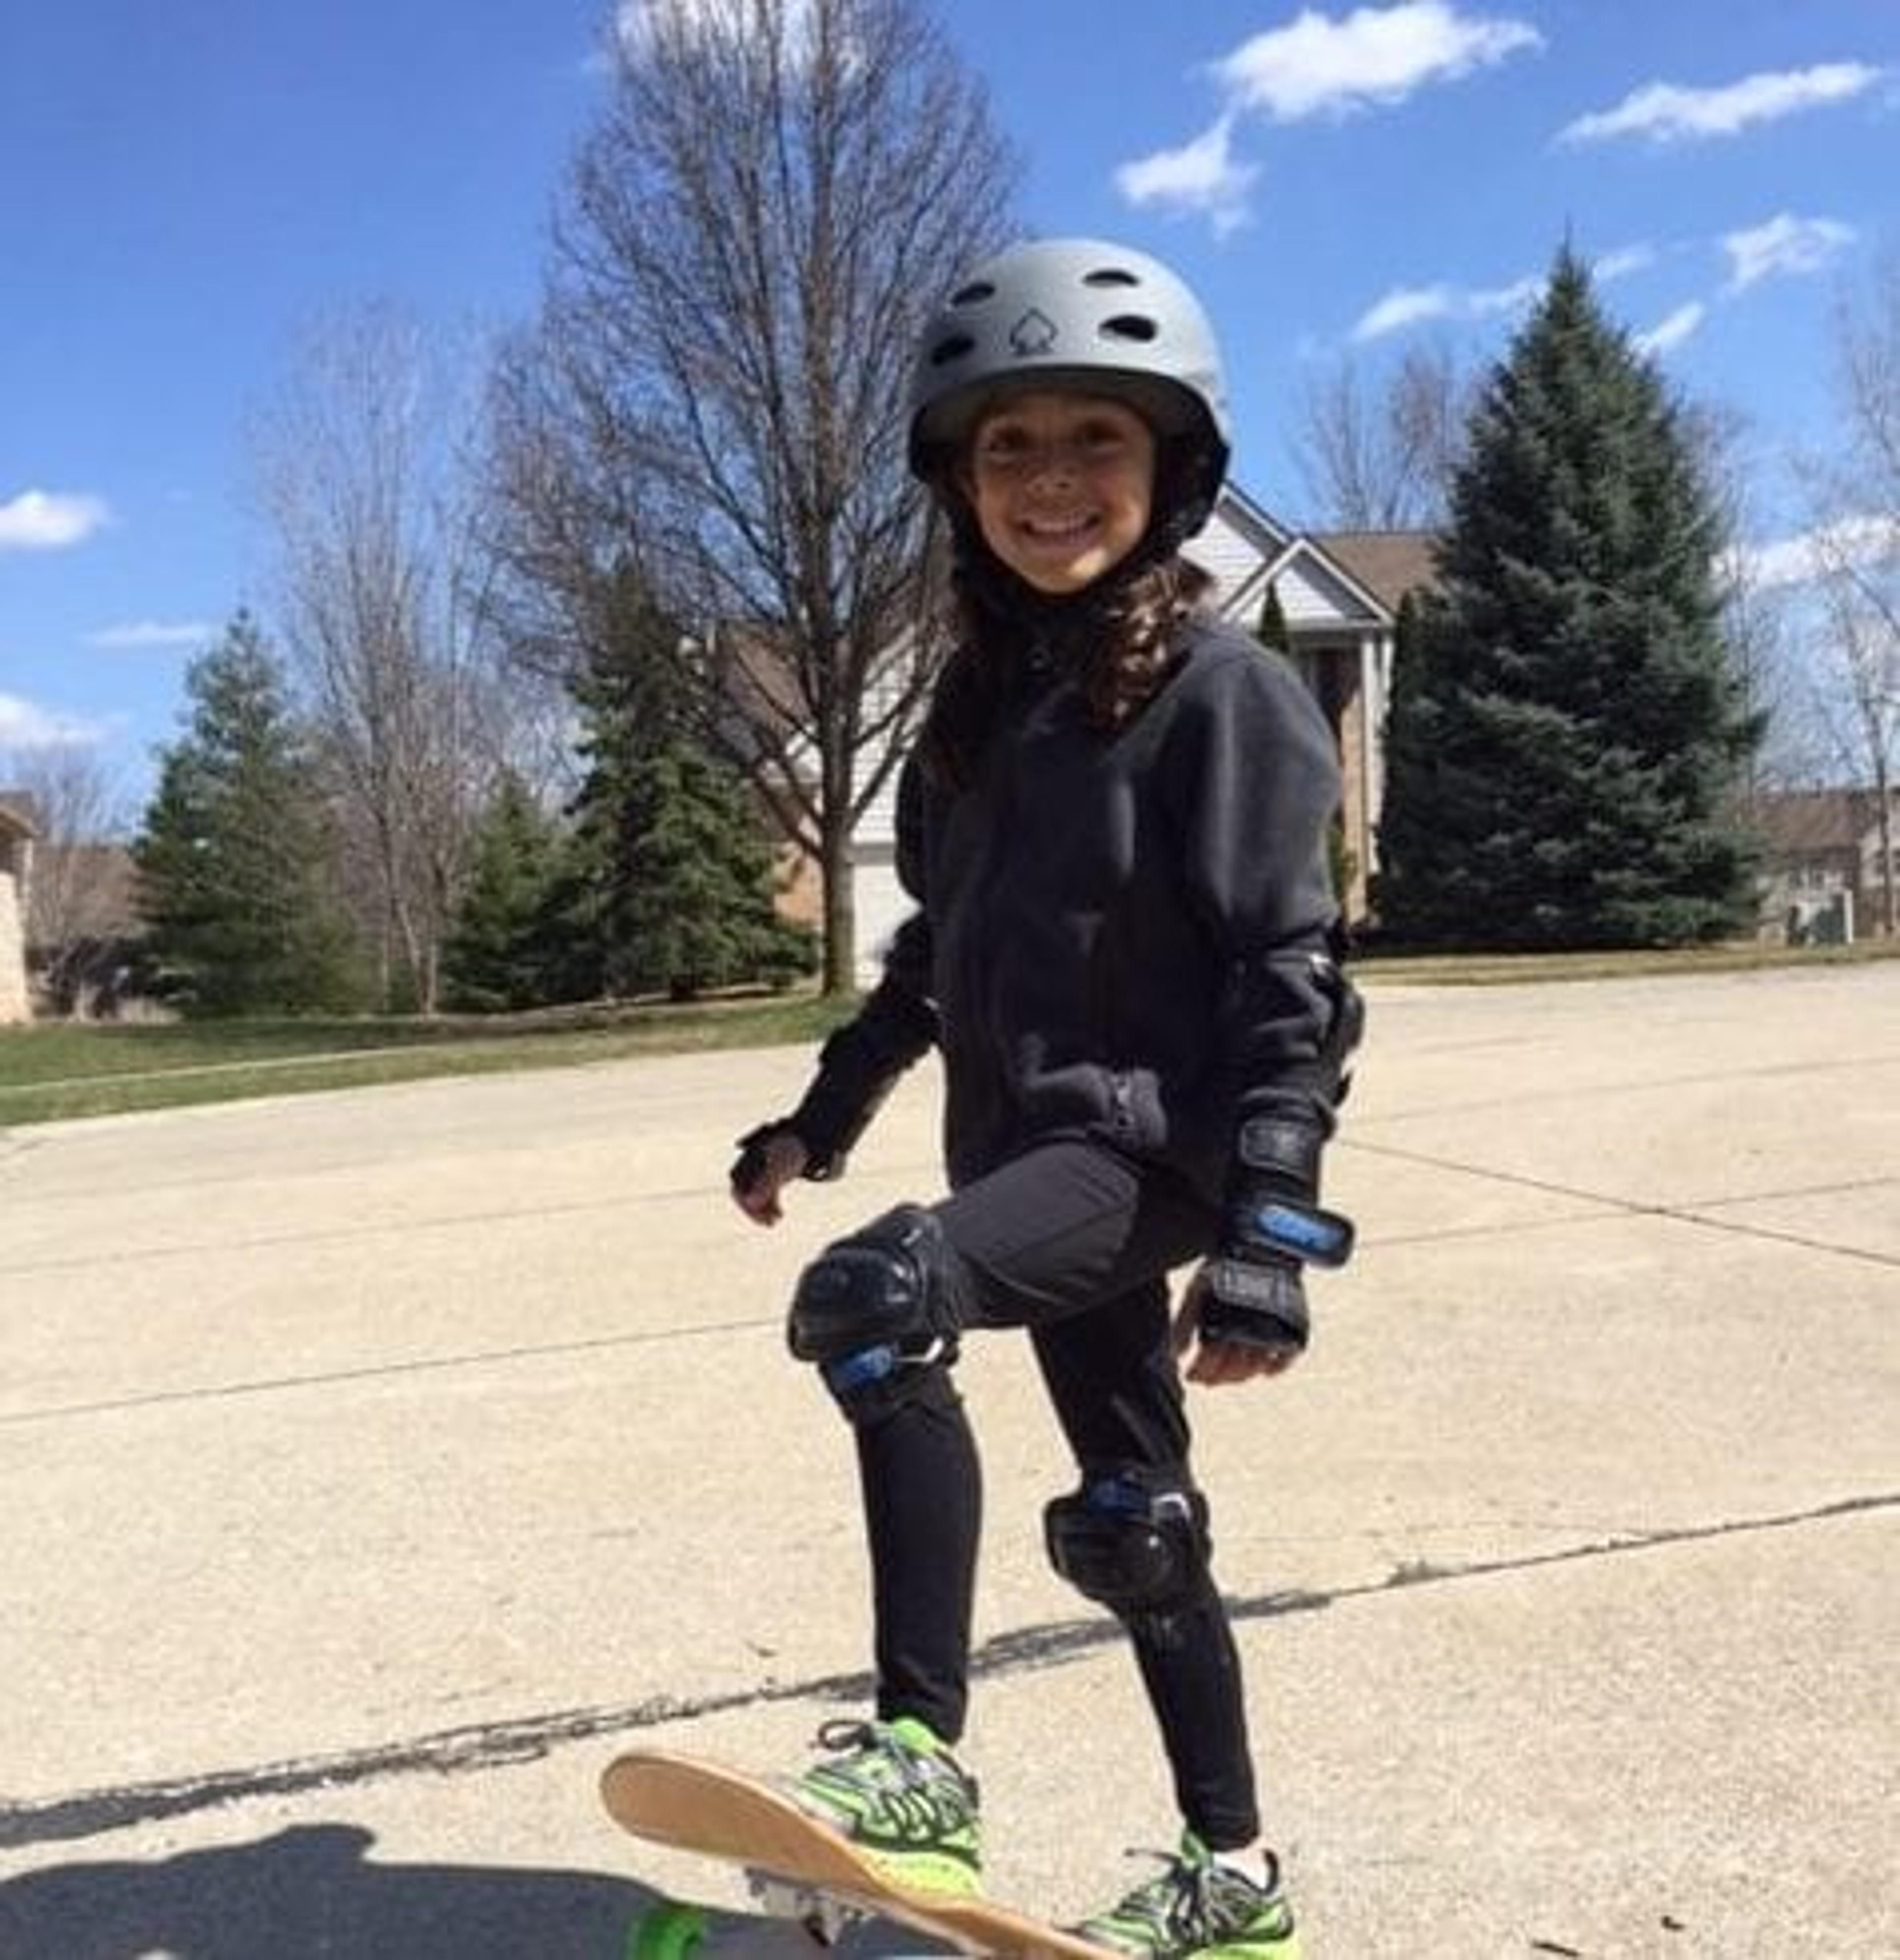 Naiya wearing a helmet skateboarding